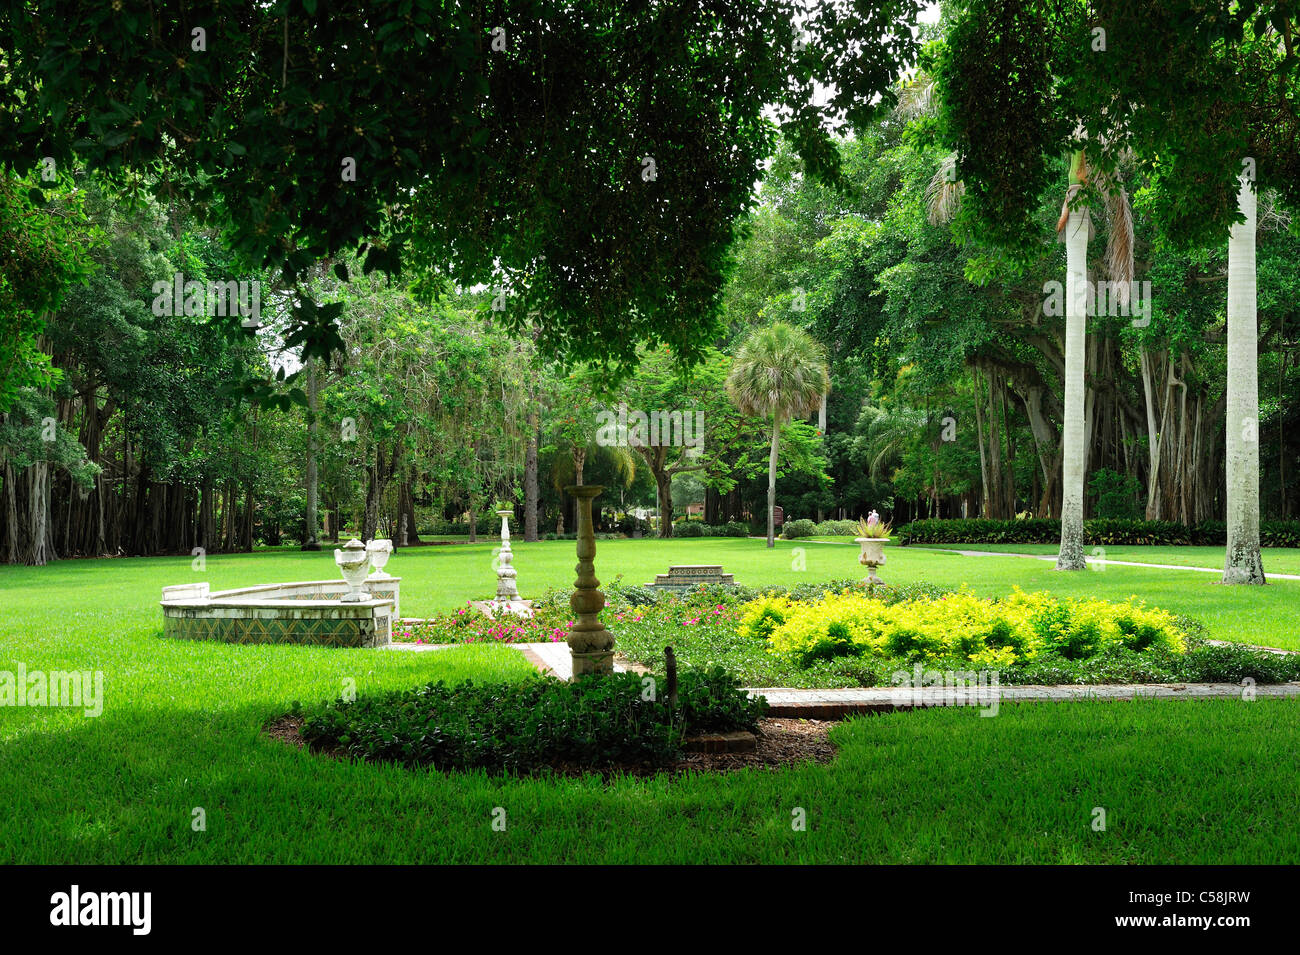 Jardin, la baie de Sarasota, Ringling Mansion, John et Mable Ringling Museum of Art, Sarasota, Floride, USA, United States, Amérique, t Banque D'Images